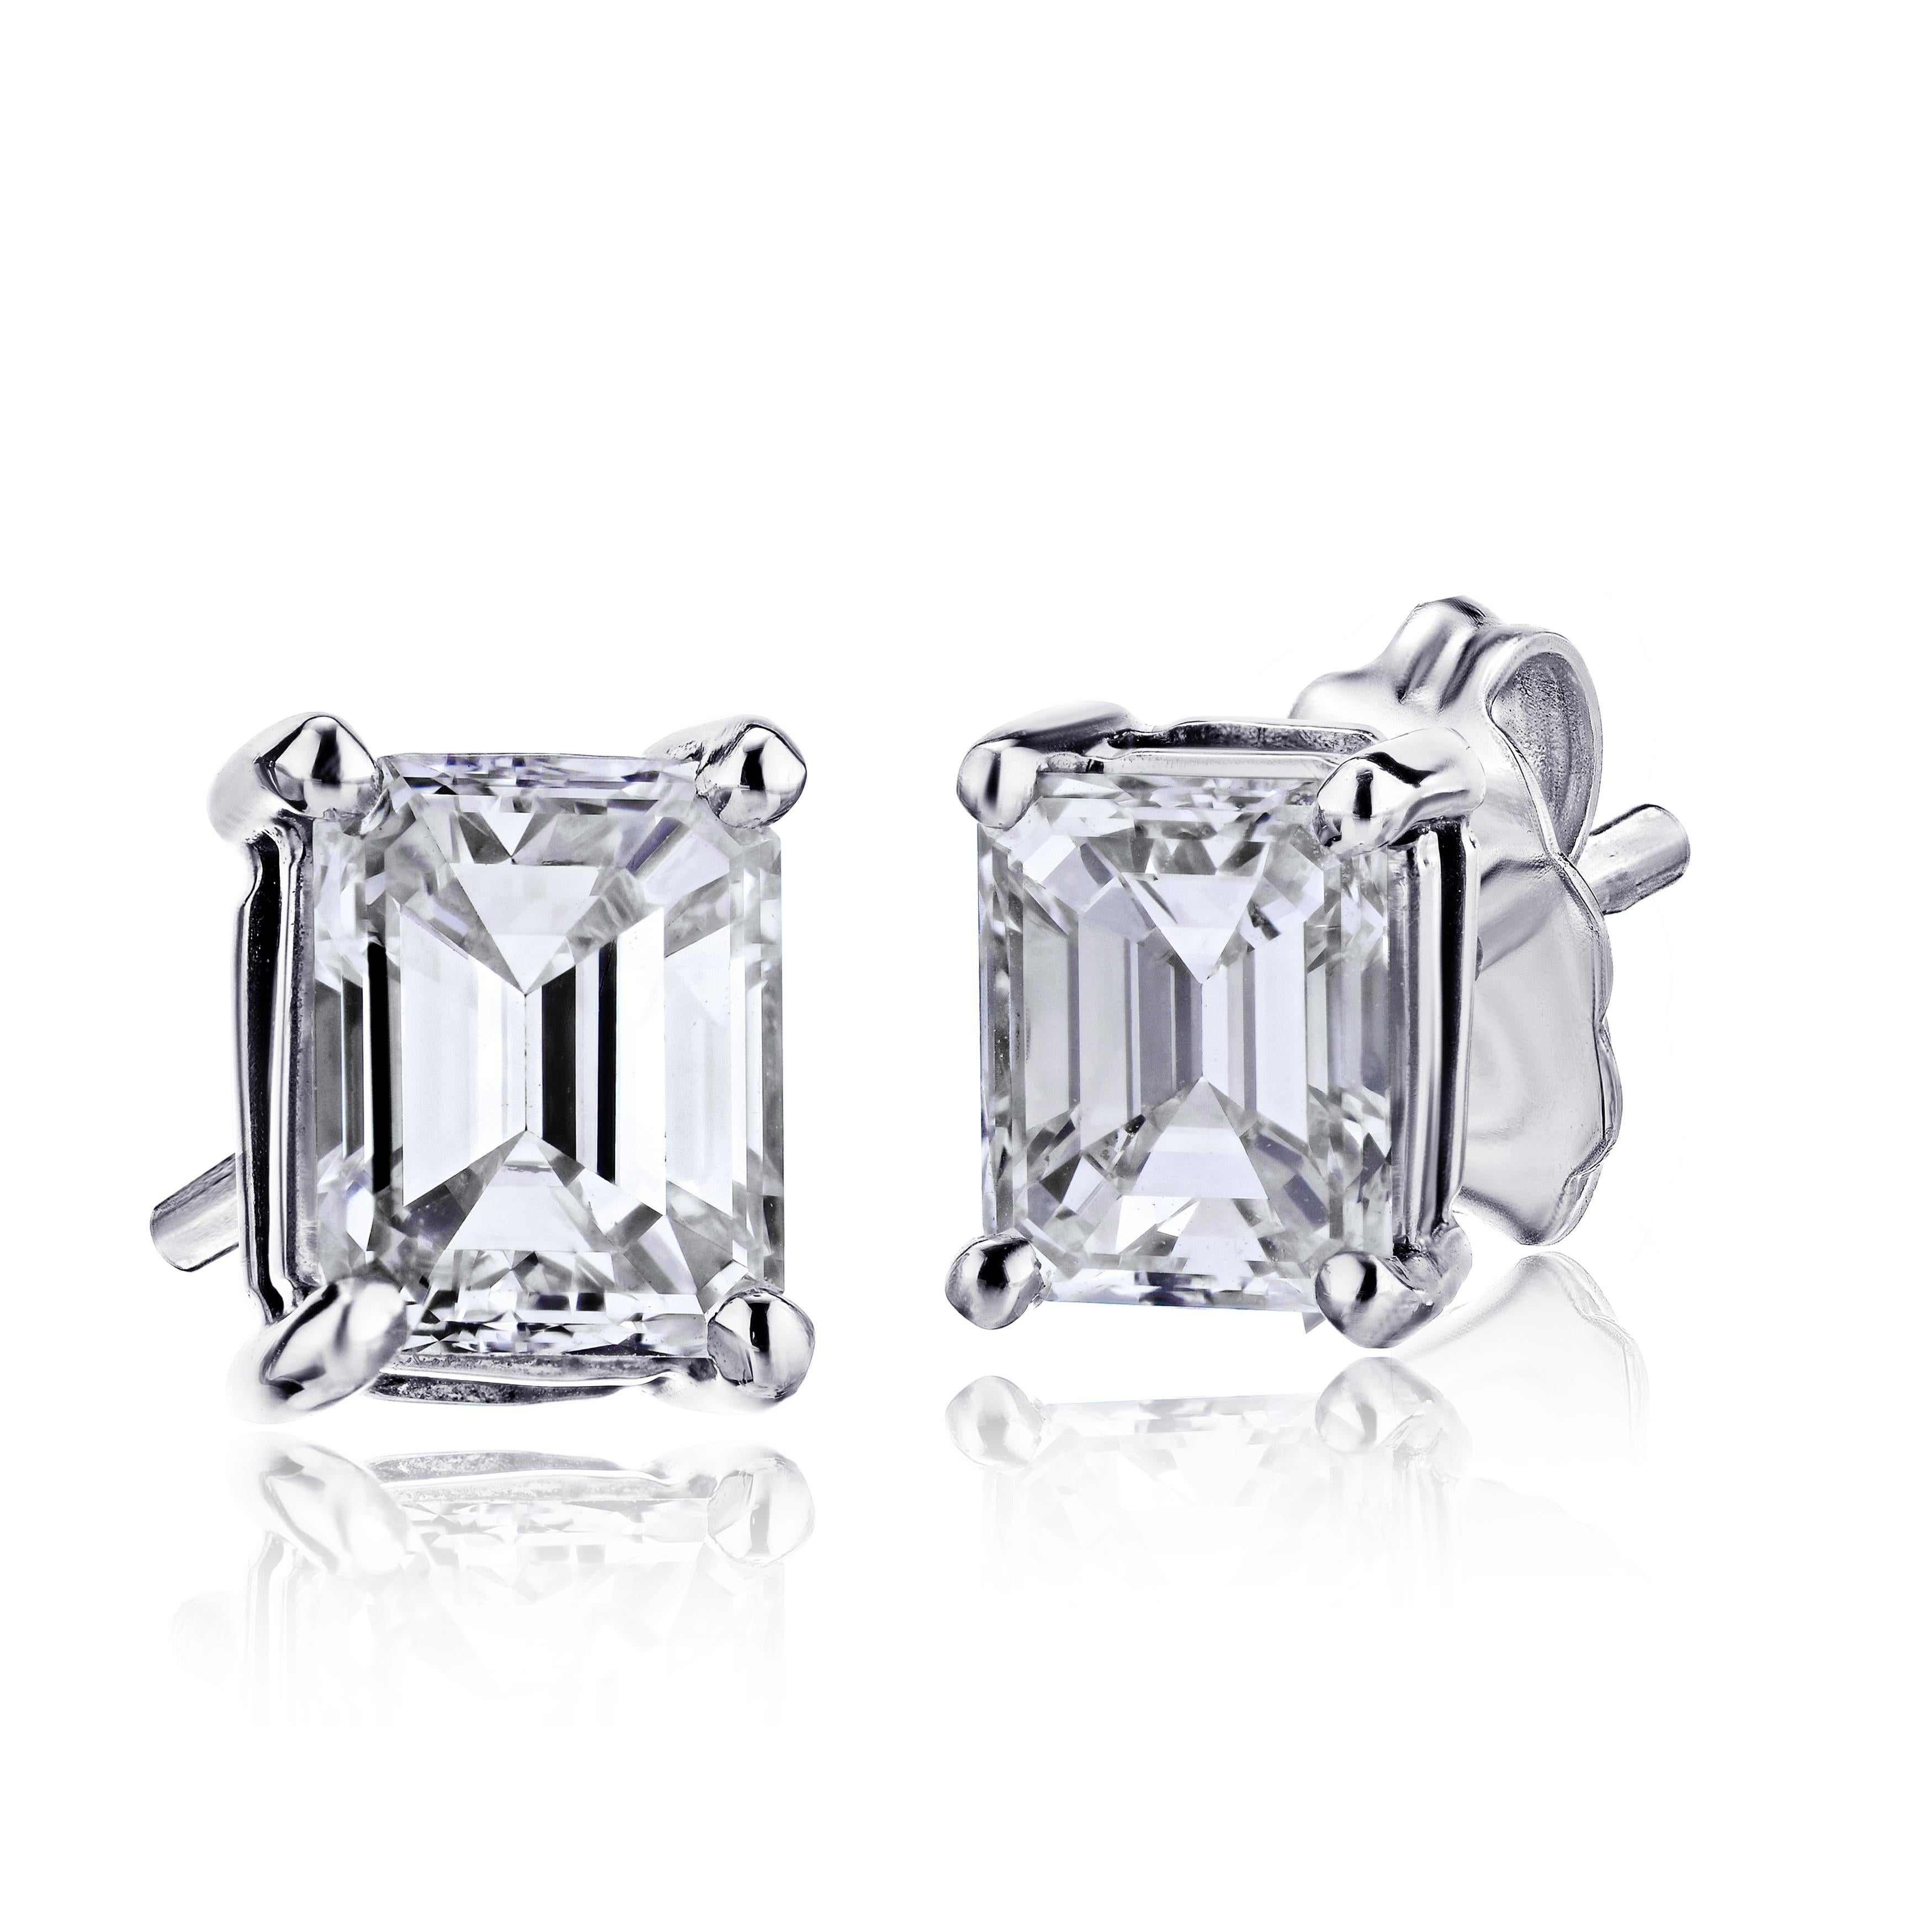 Contemporary GIA Certified Platinum Emerald Cut Diamond Earring Studs 1/2 Carat Total